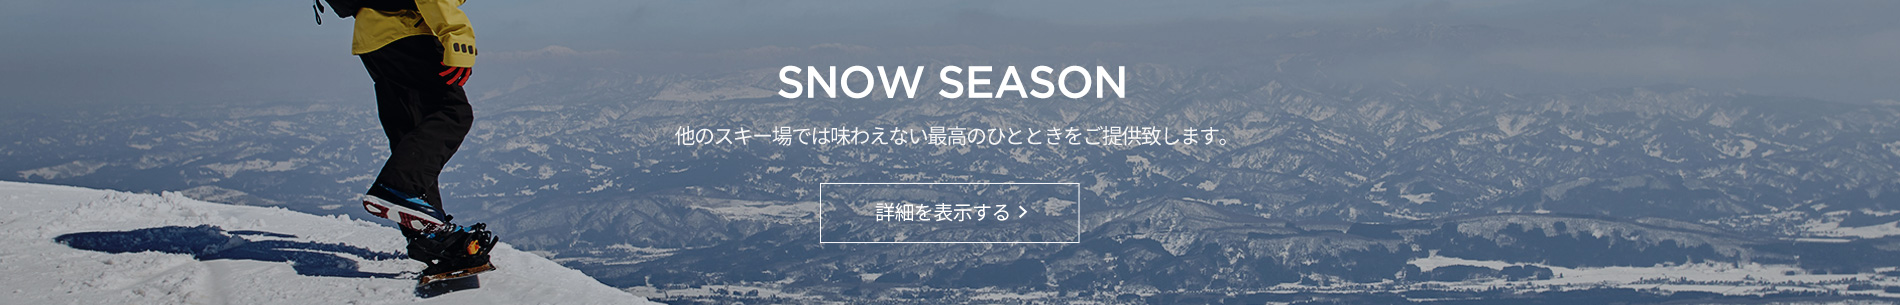 snow season banner